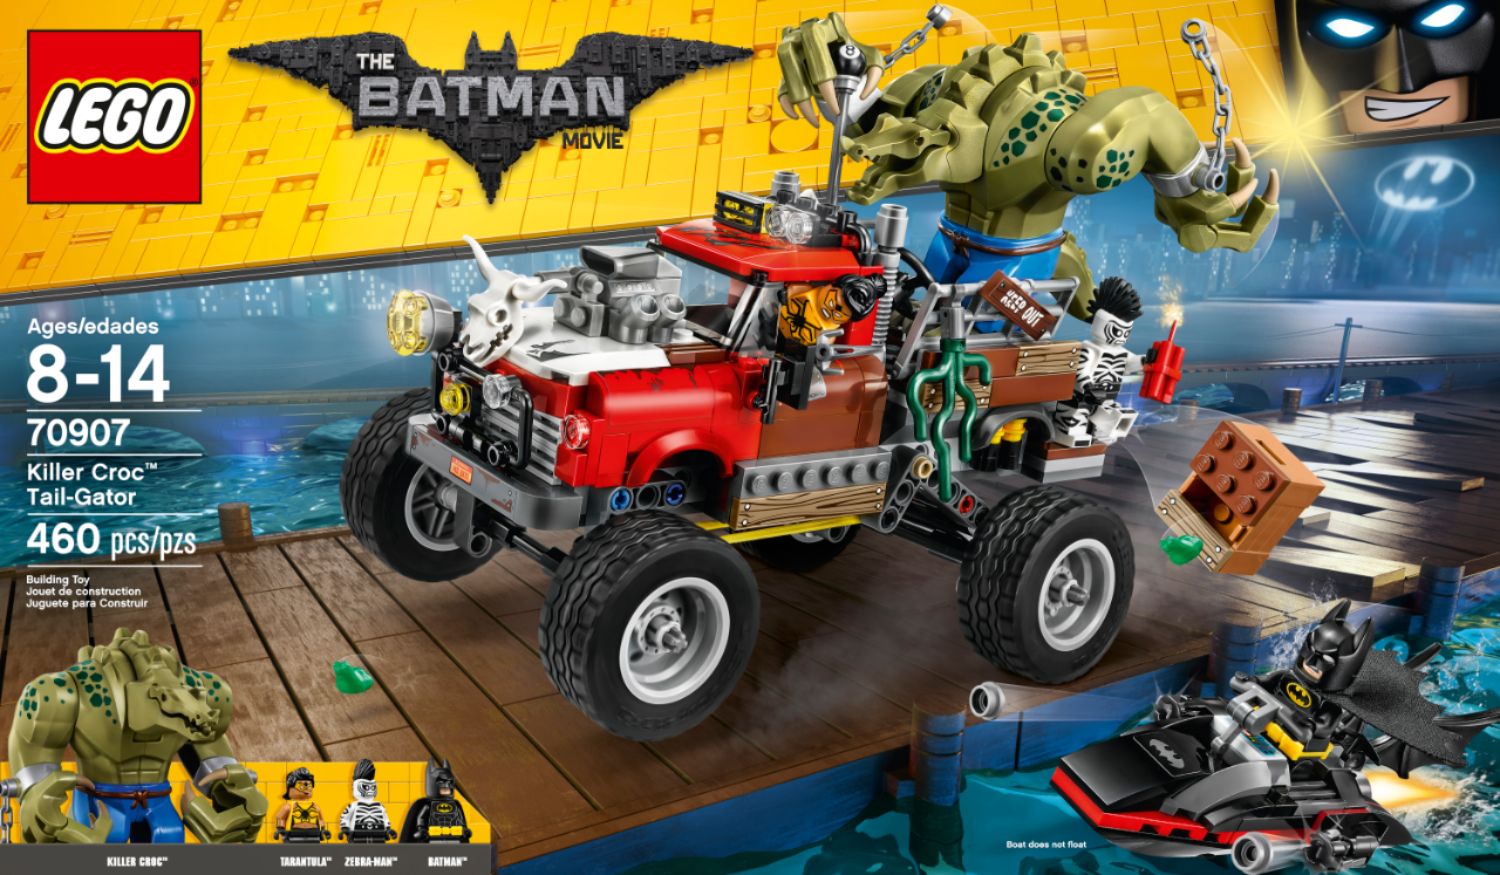 LEGO THE LEGO BATMAN MOVIE THE LEGO BATMAN MOVIE Killer Croc Tail